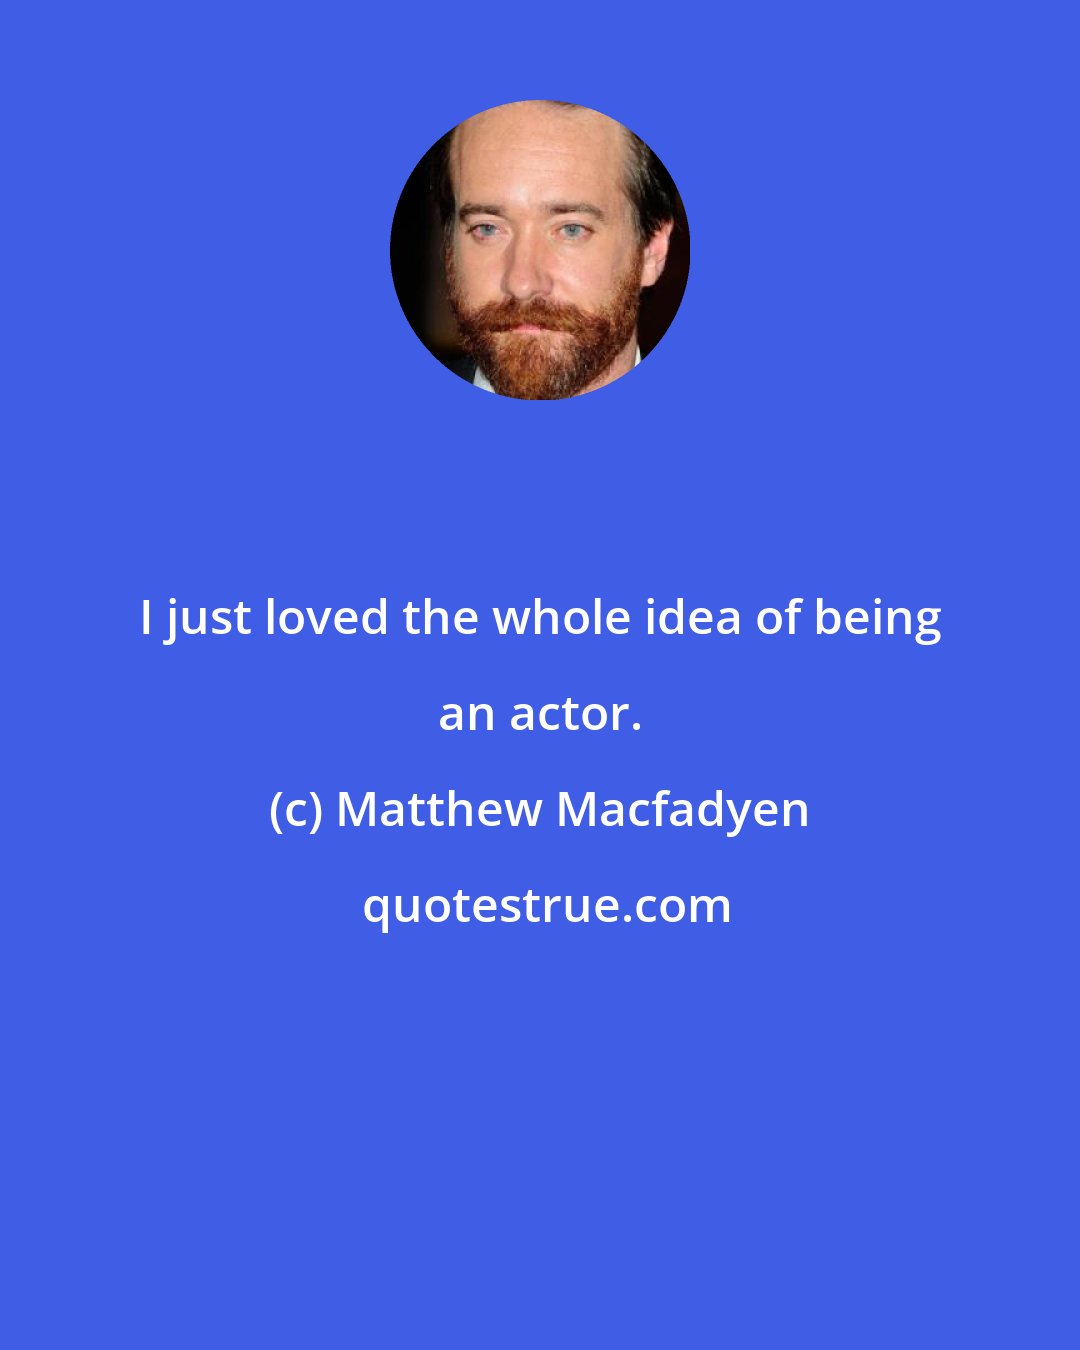 Matthew Macfadyen: I just loved the whole idea of being an actor.